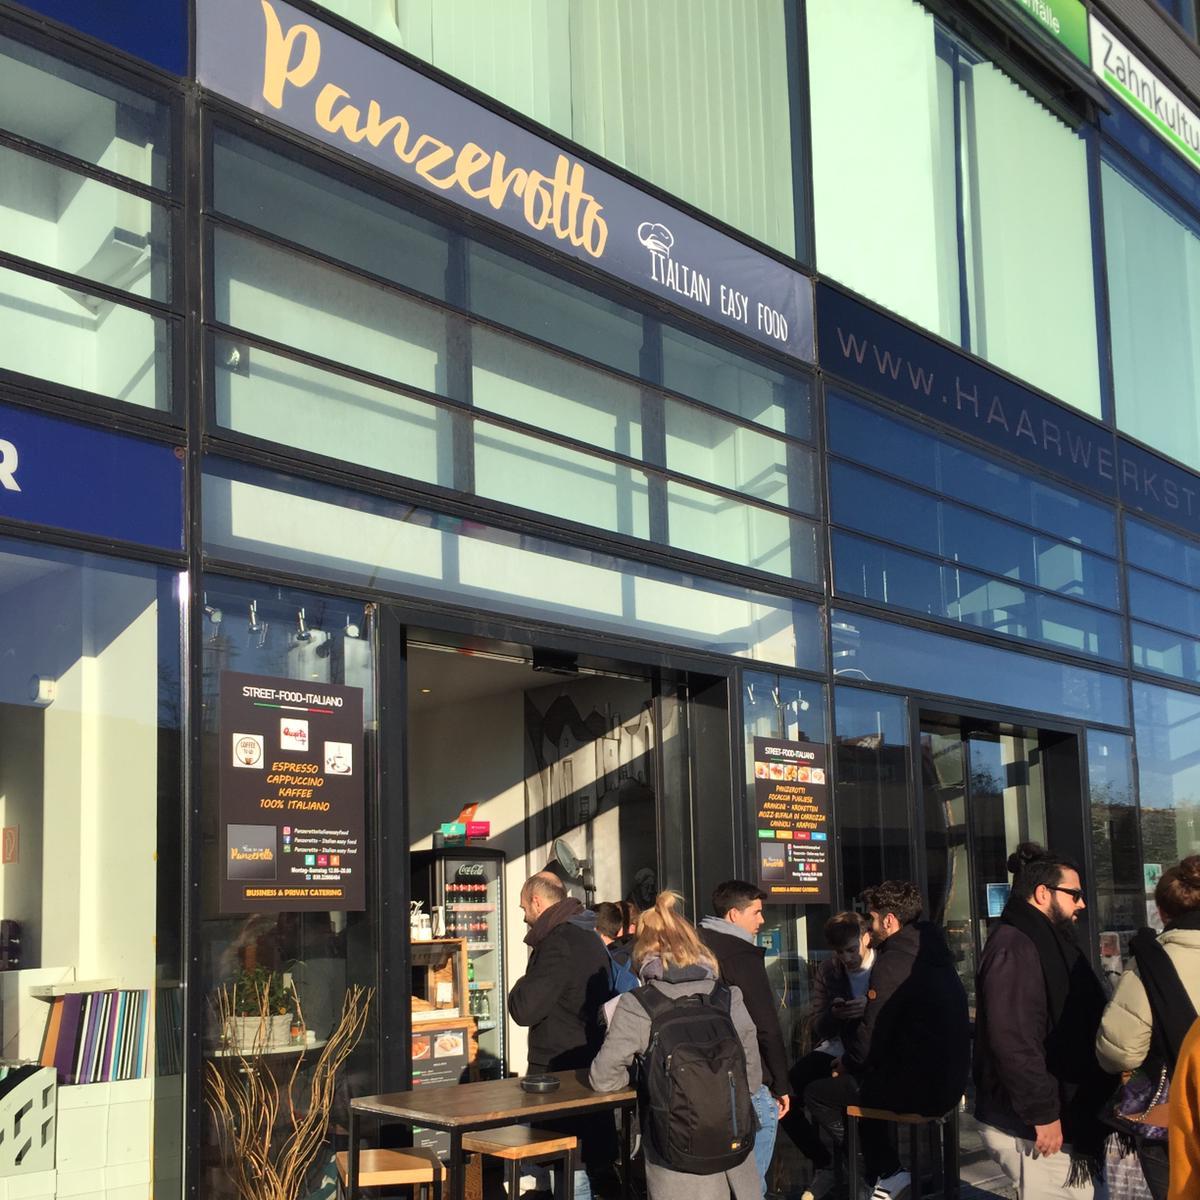 Restaurant "Panzerotto - Italian easy food" in Berlin